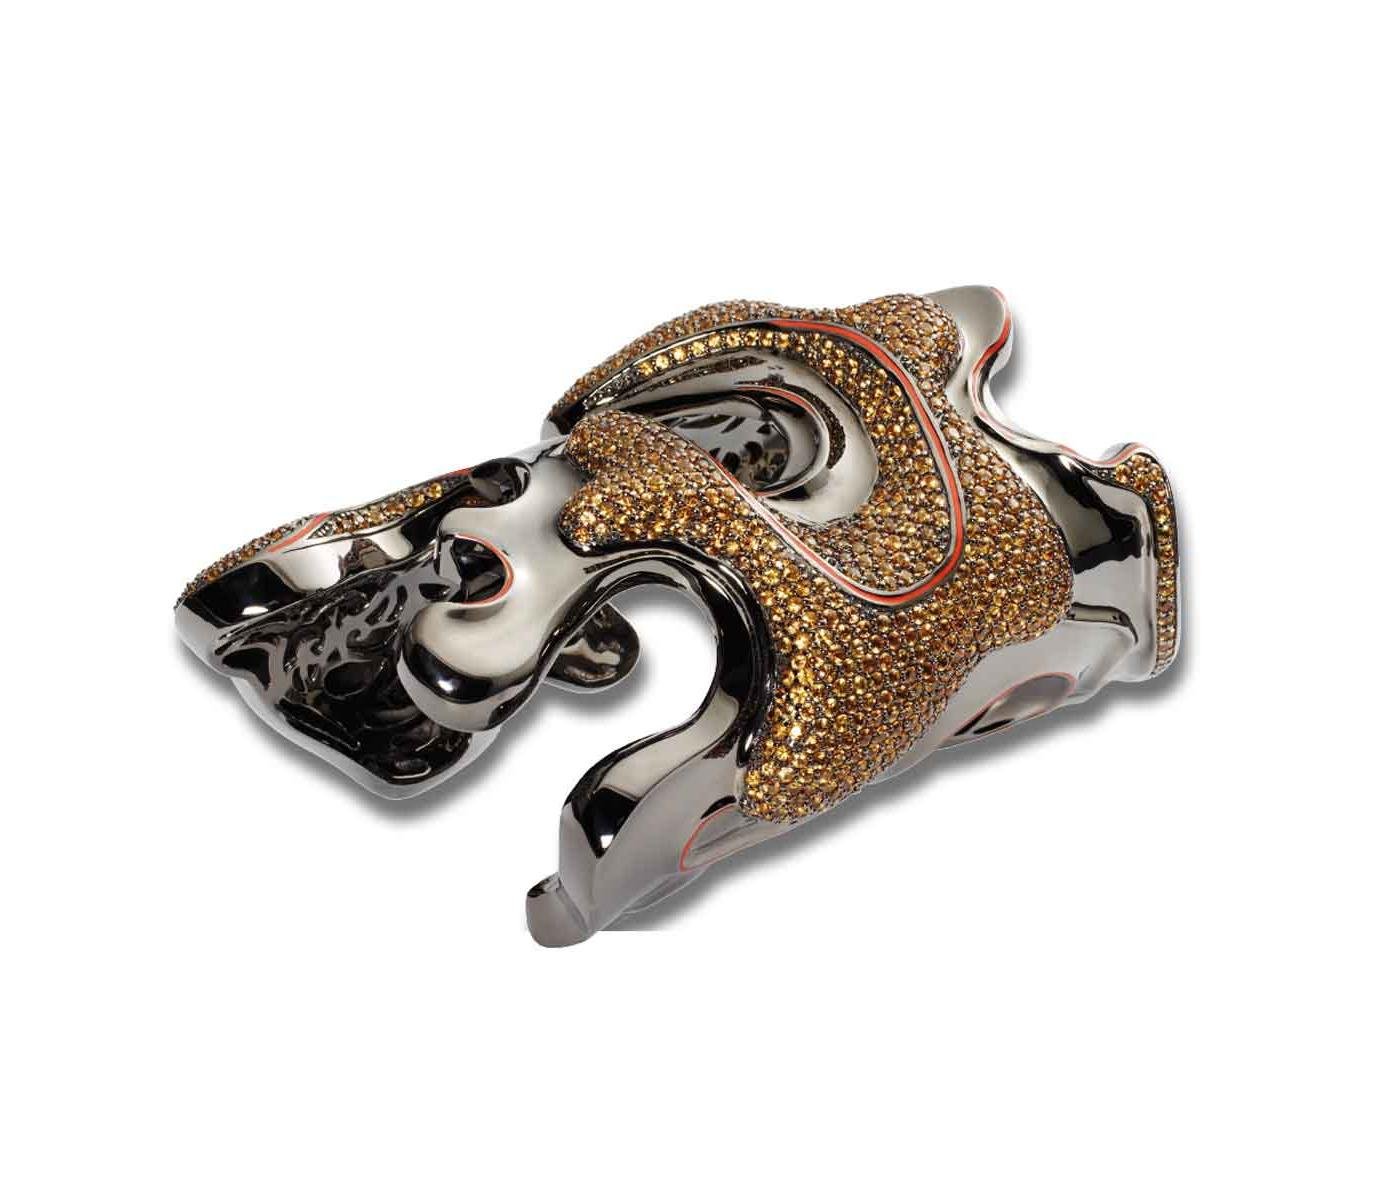 Bracelet by MCL for Swarovski Gems